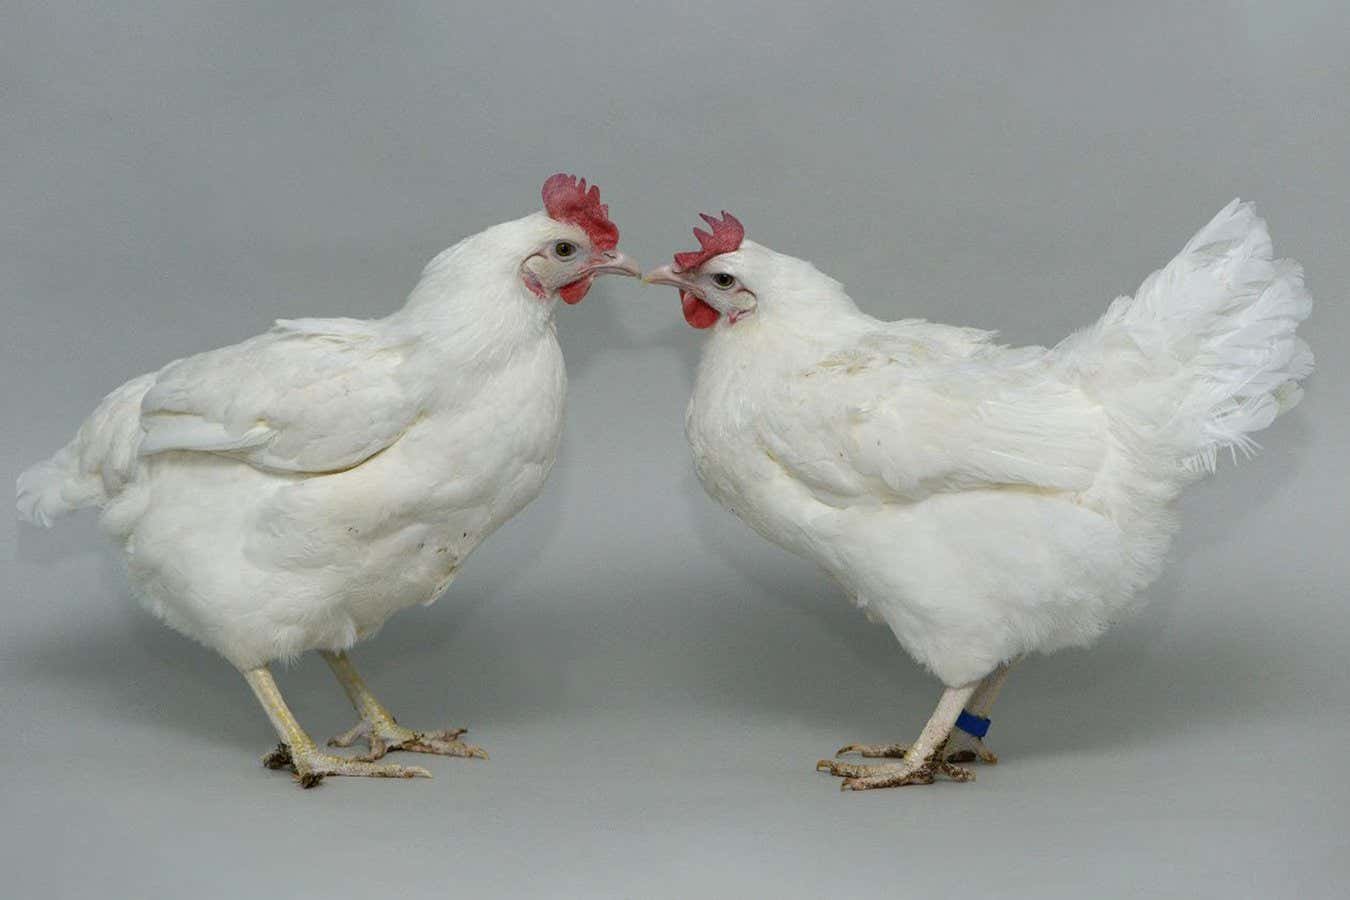 Chickens made resistant to bird flu with CRISPR gene editing